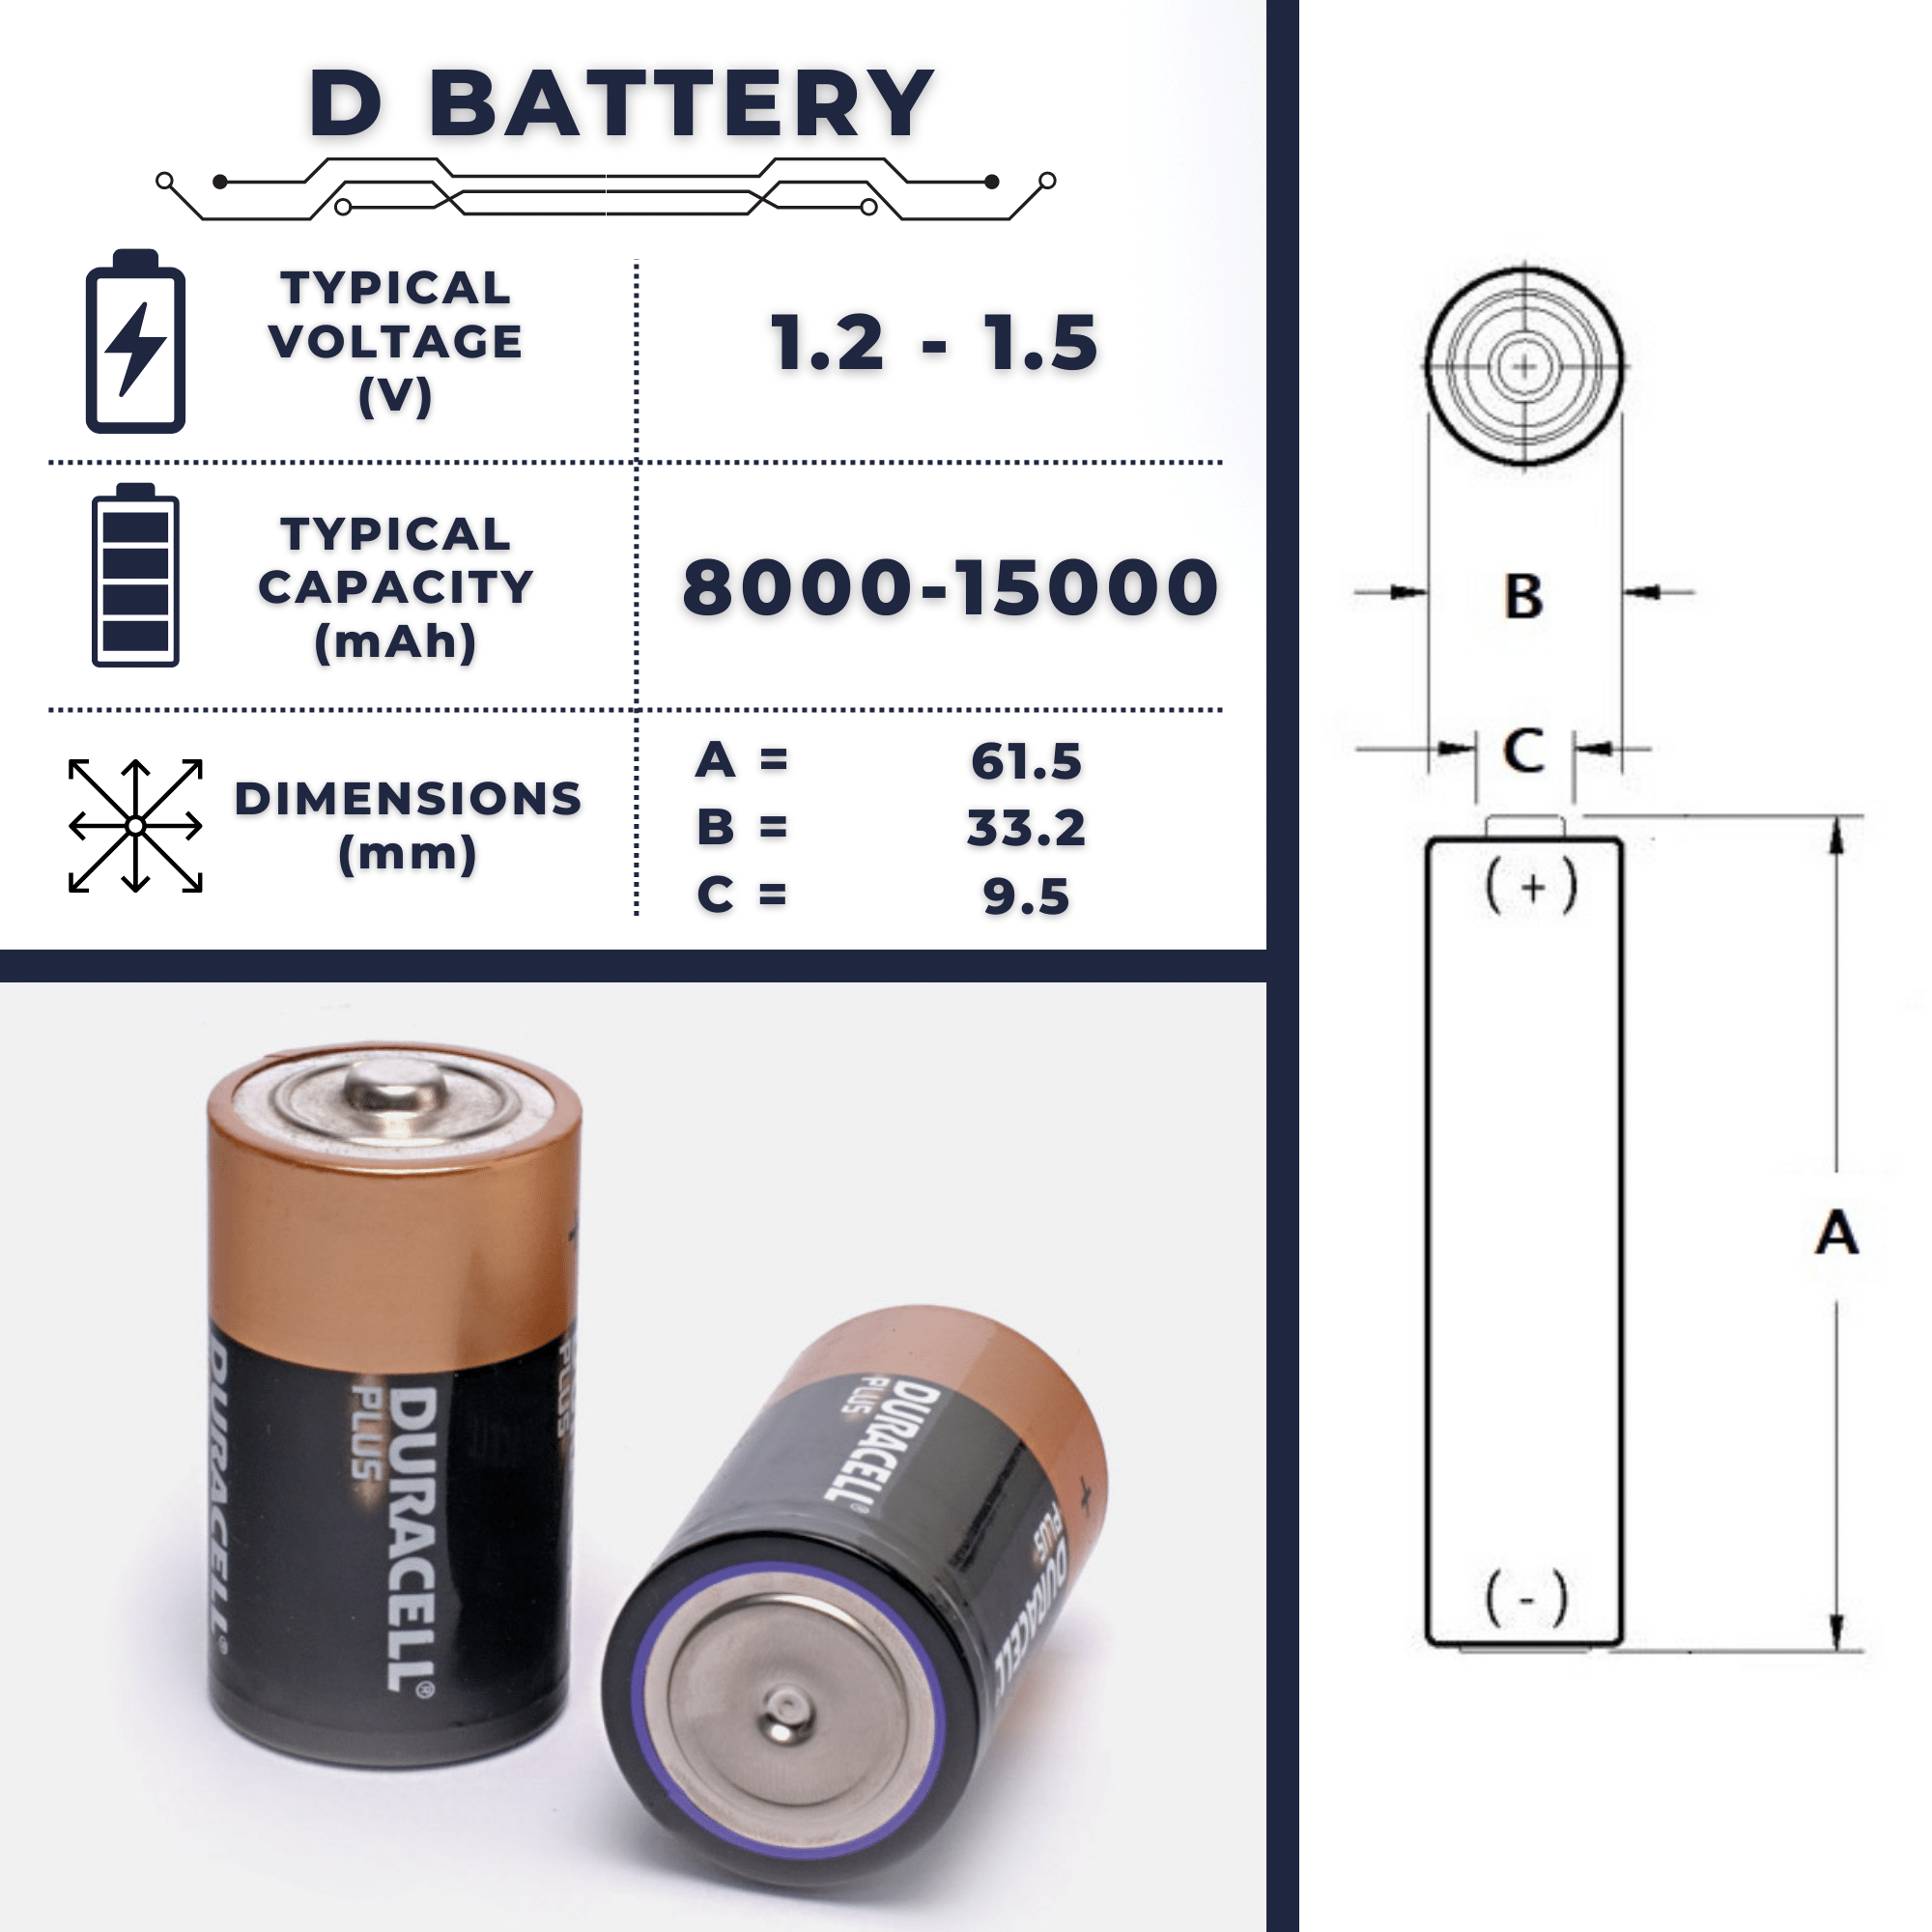 Characteristics of D Batteries  Voltage, Capacity & Self-discharge